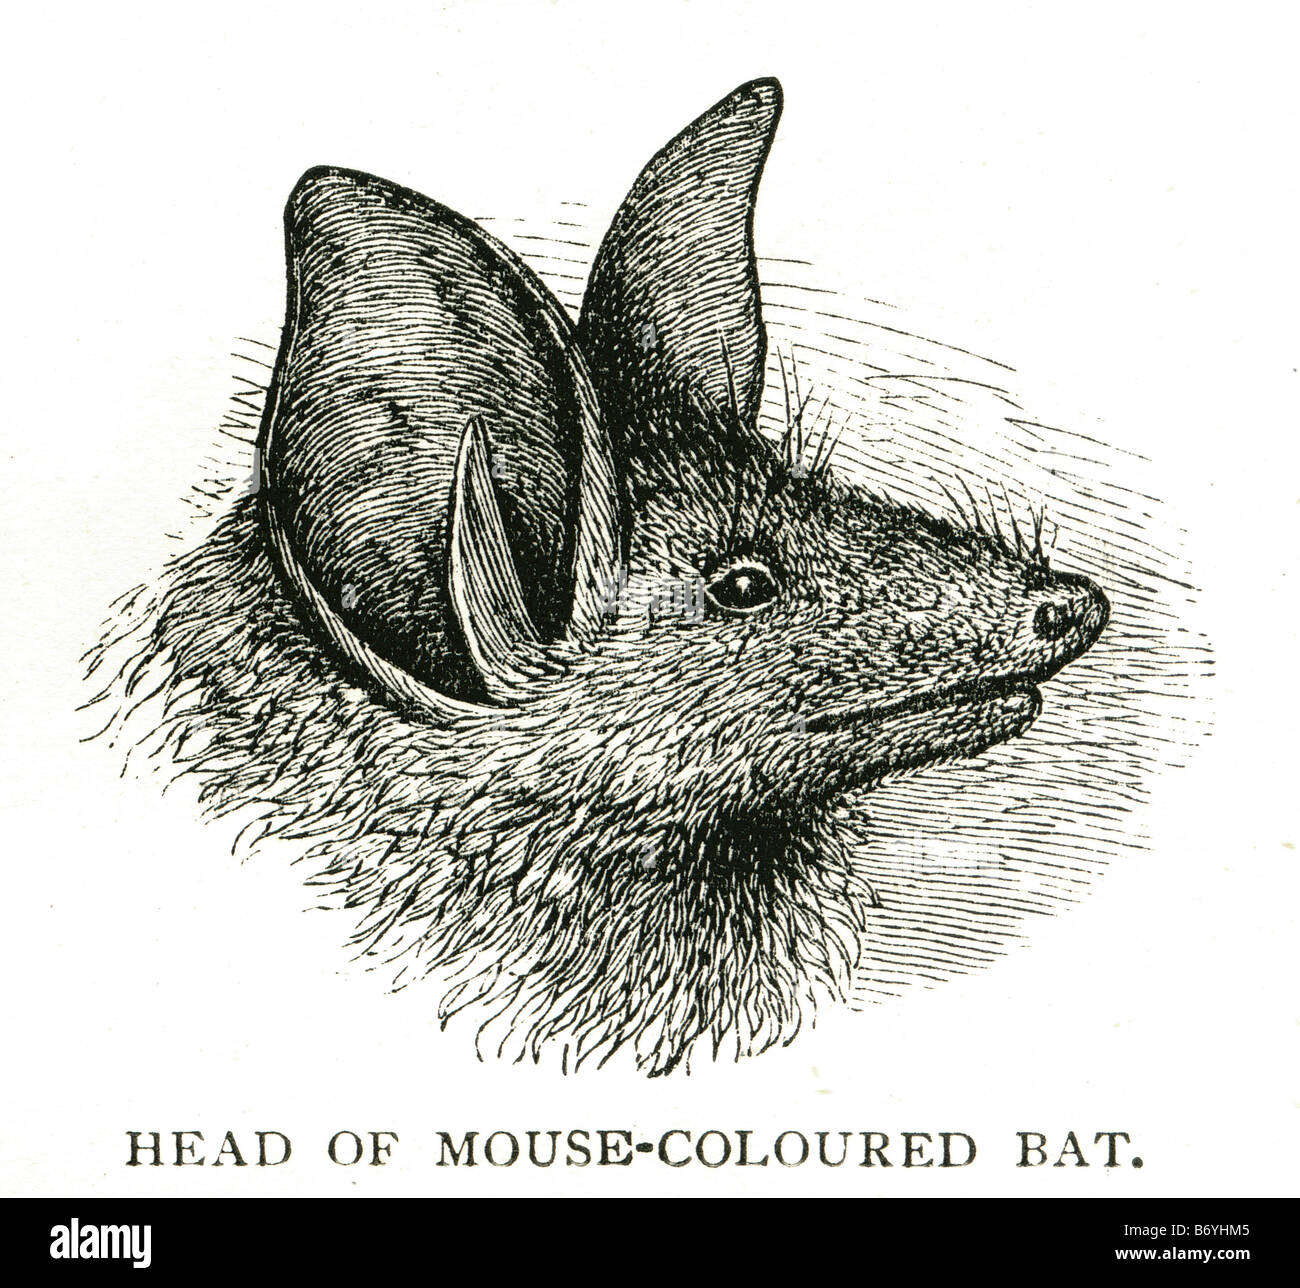 head of mouse-coloured bat Chiroptera mammal Stock Photo